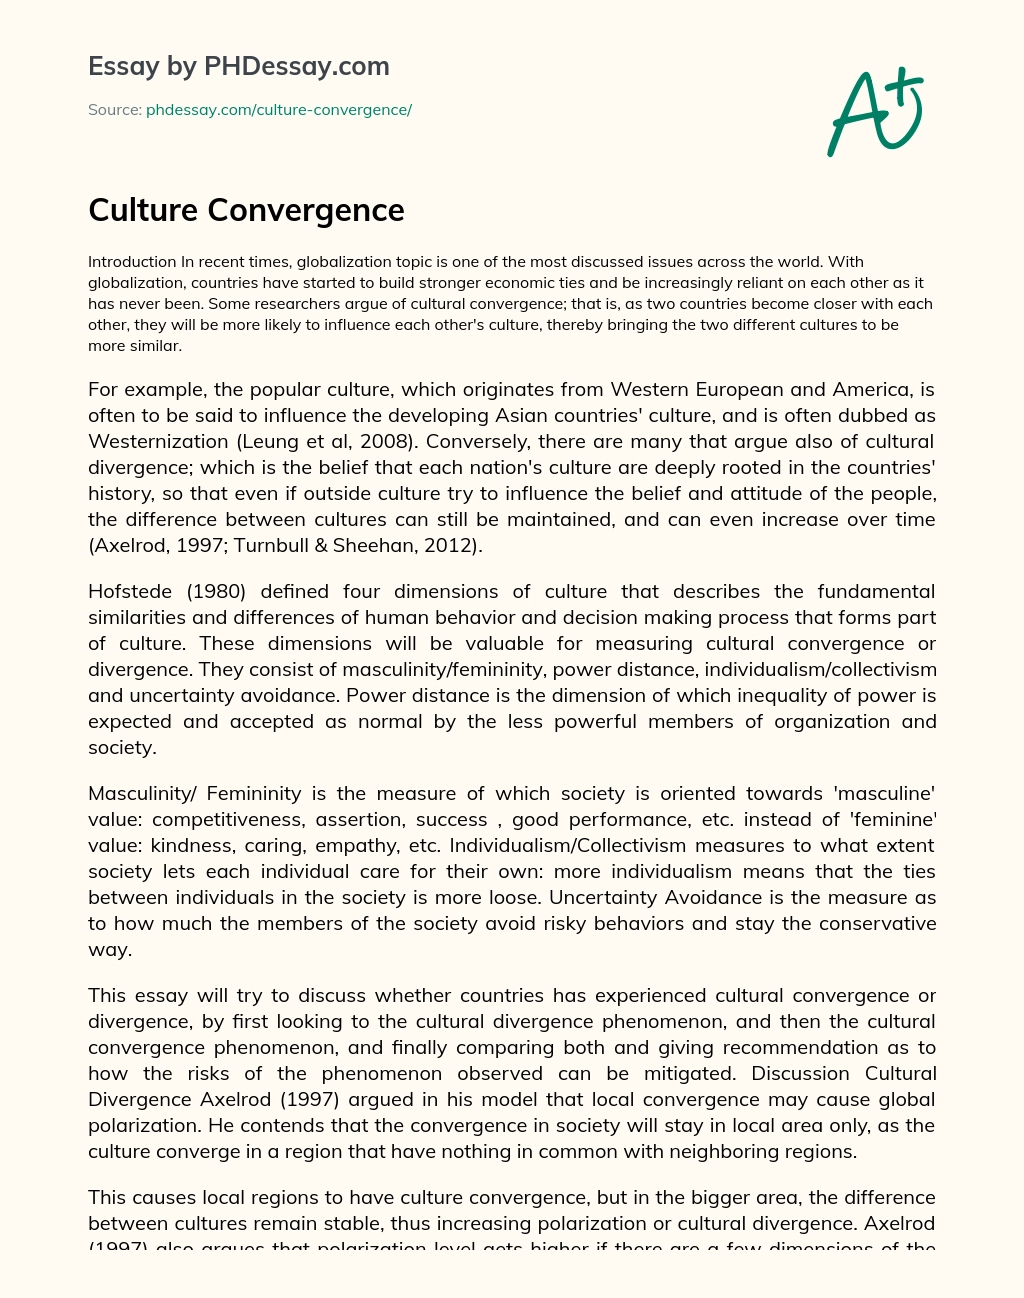 Culture Convergence essay